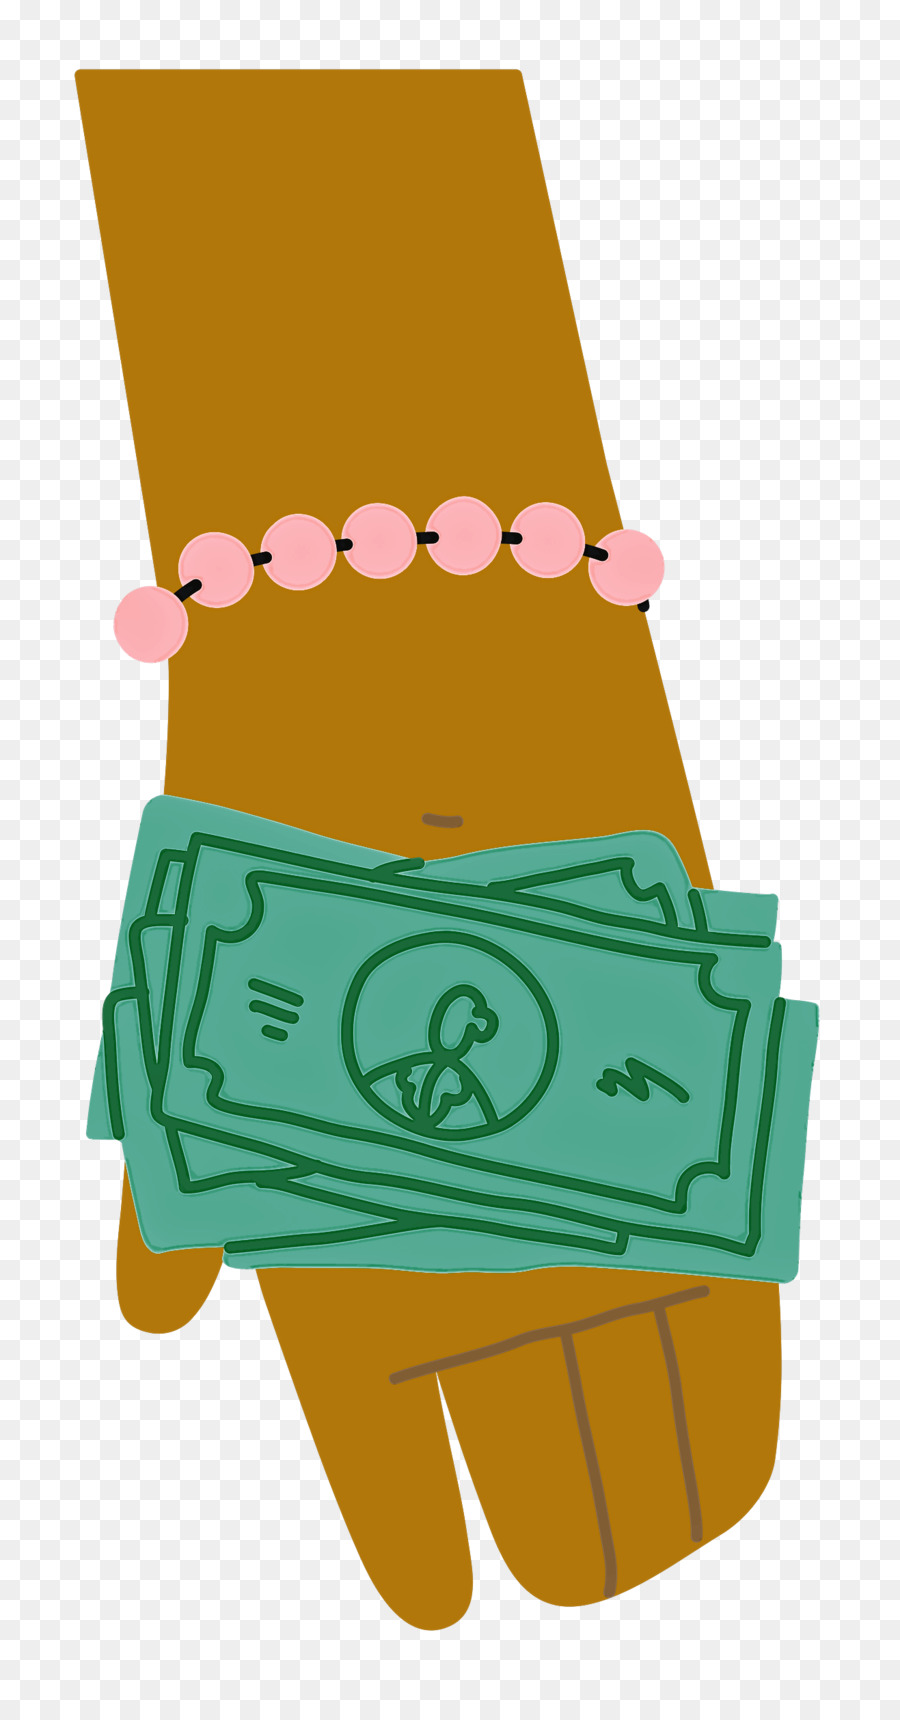 Hand giving cash